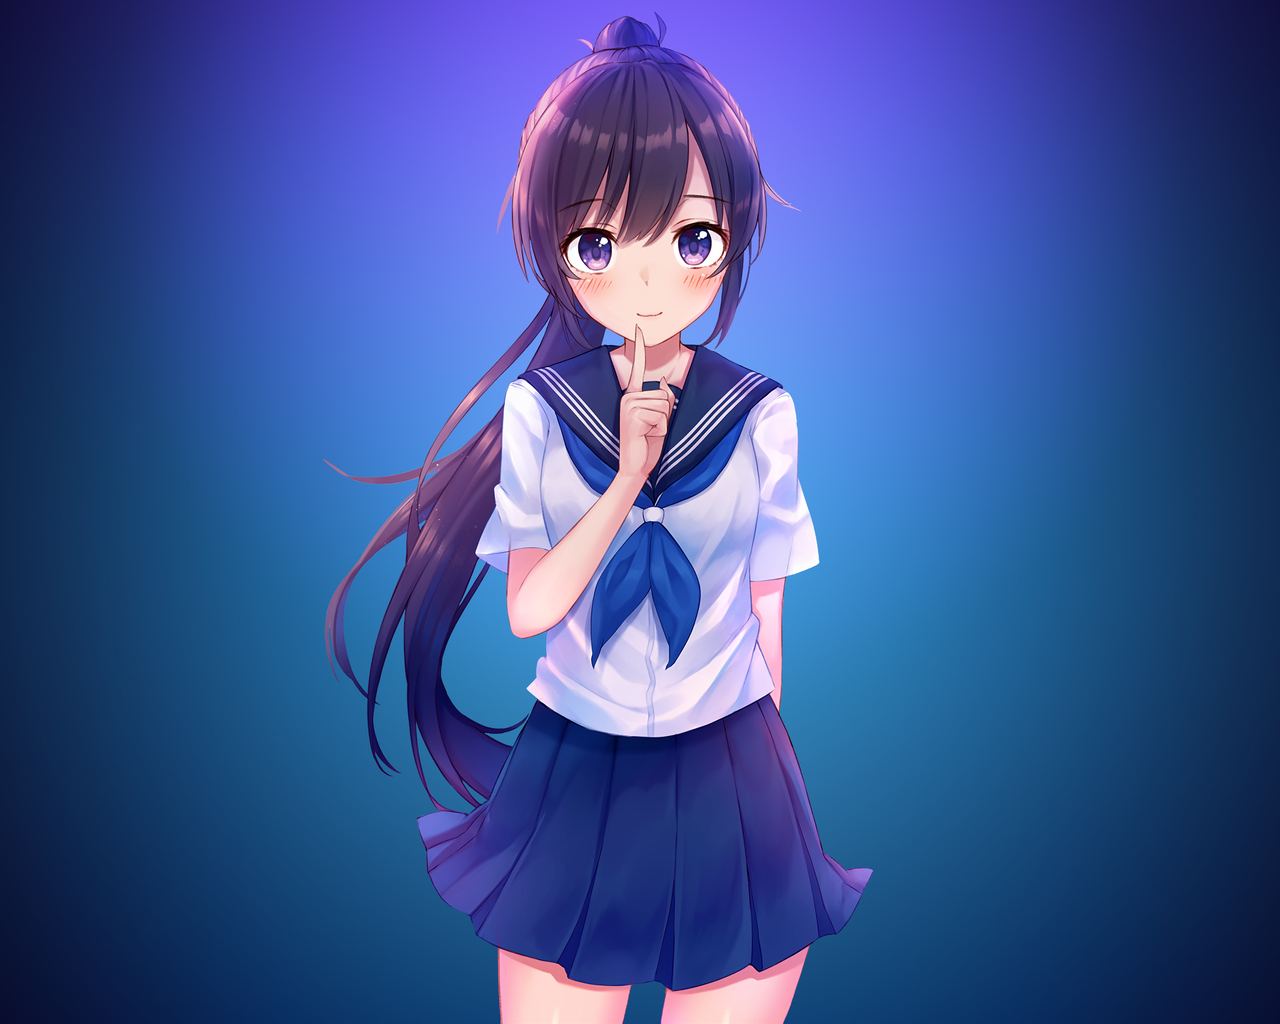 1280x1024 Anime Girl In School Uniform 4k 1280x1024 ...